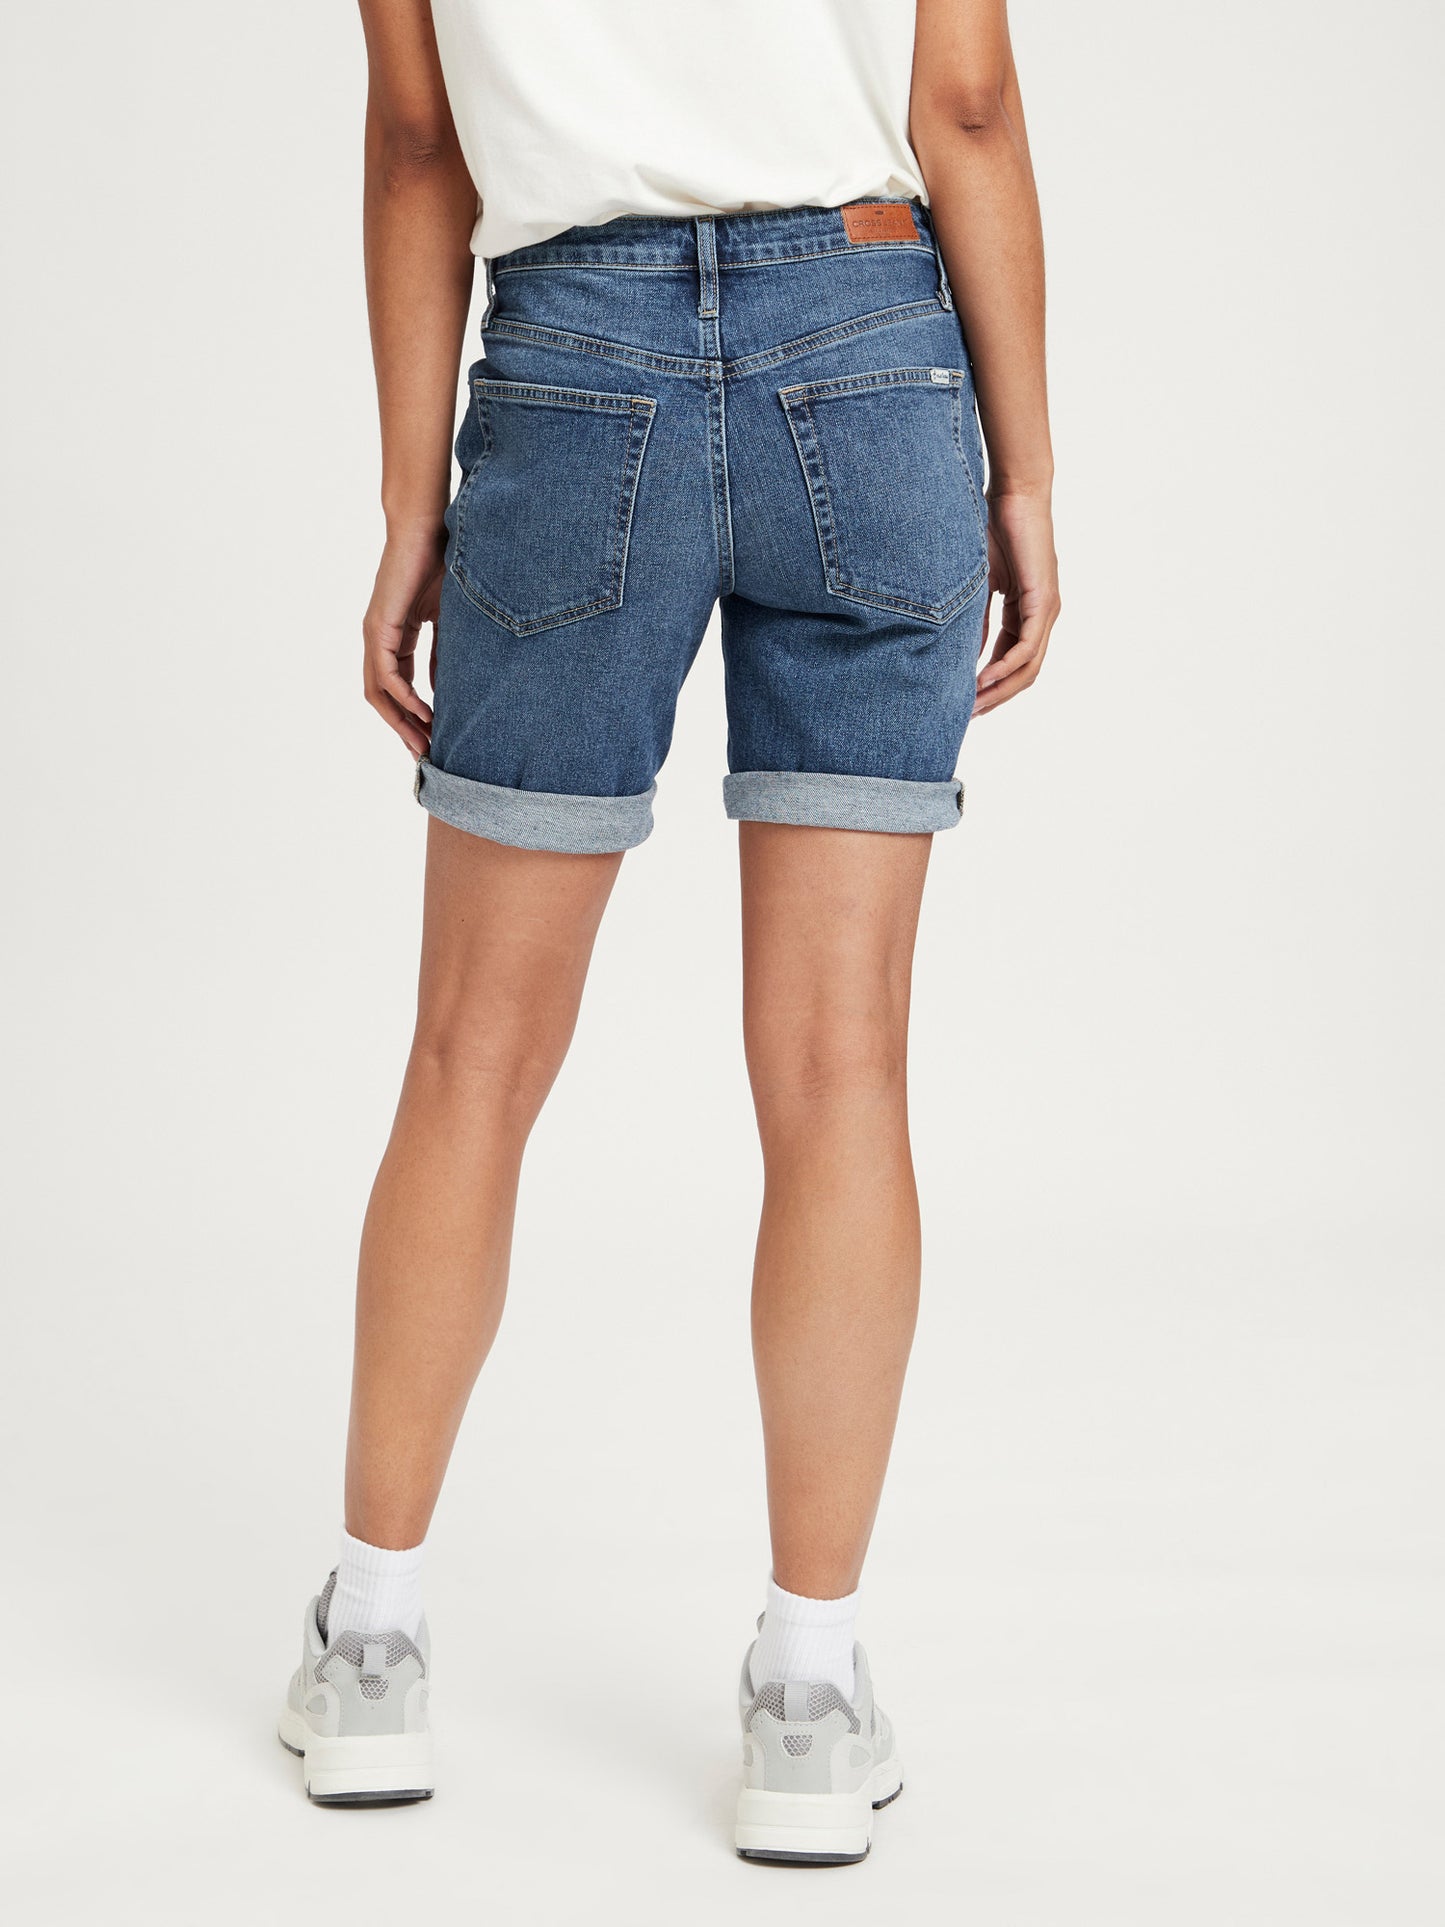 Brooke Damen Jeans-Shorts Mid Waist blau